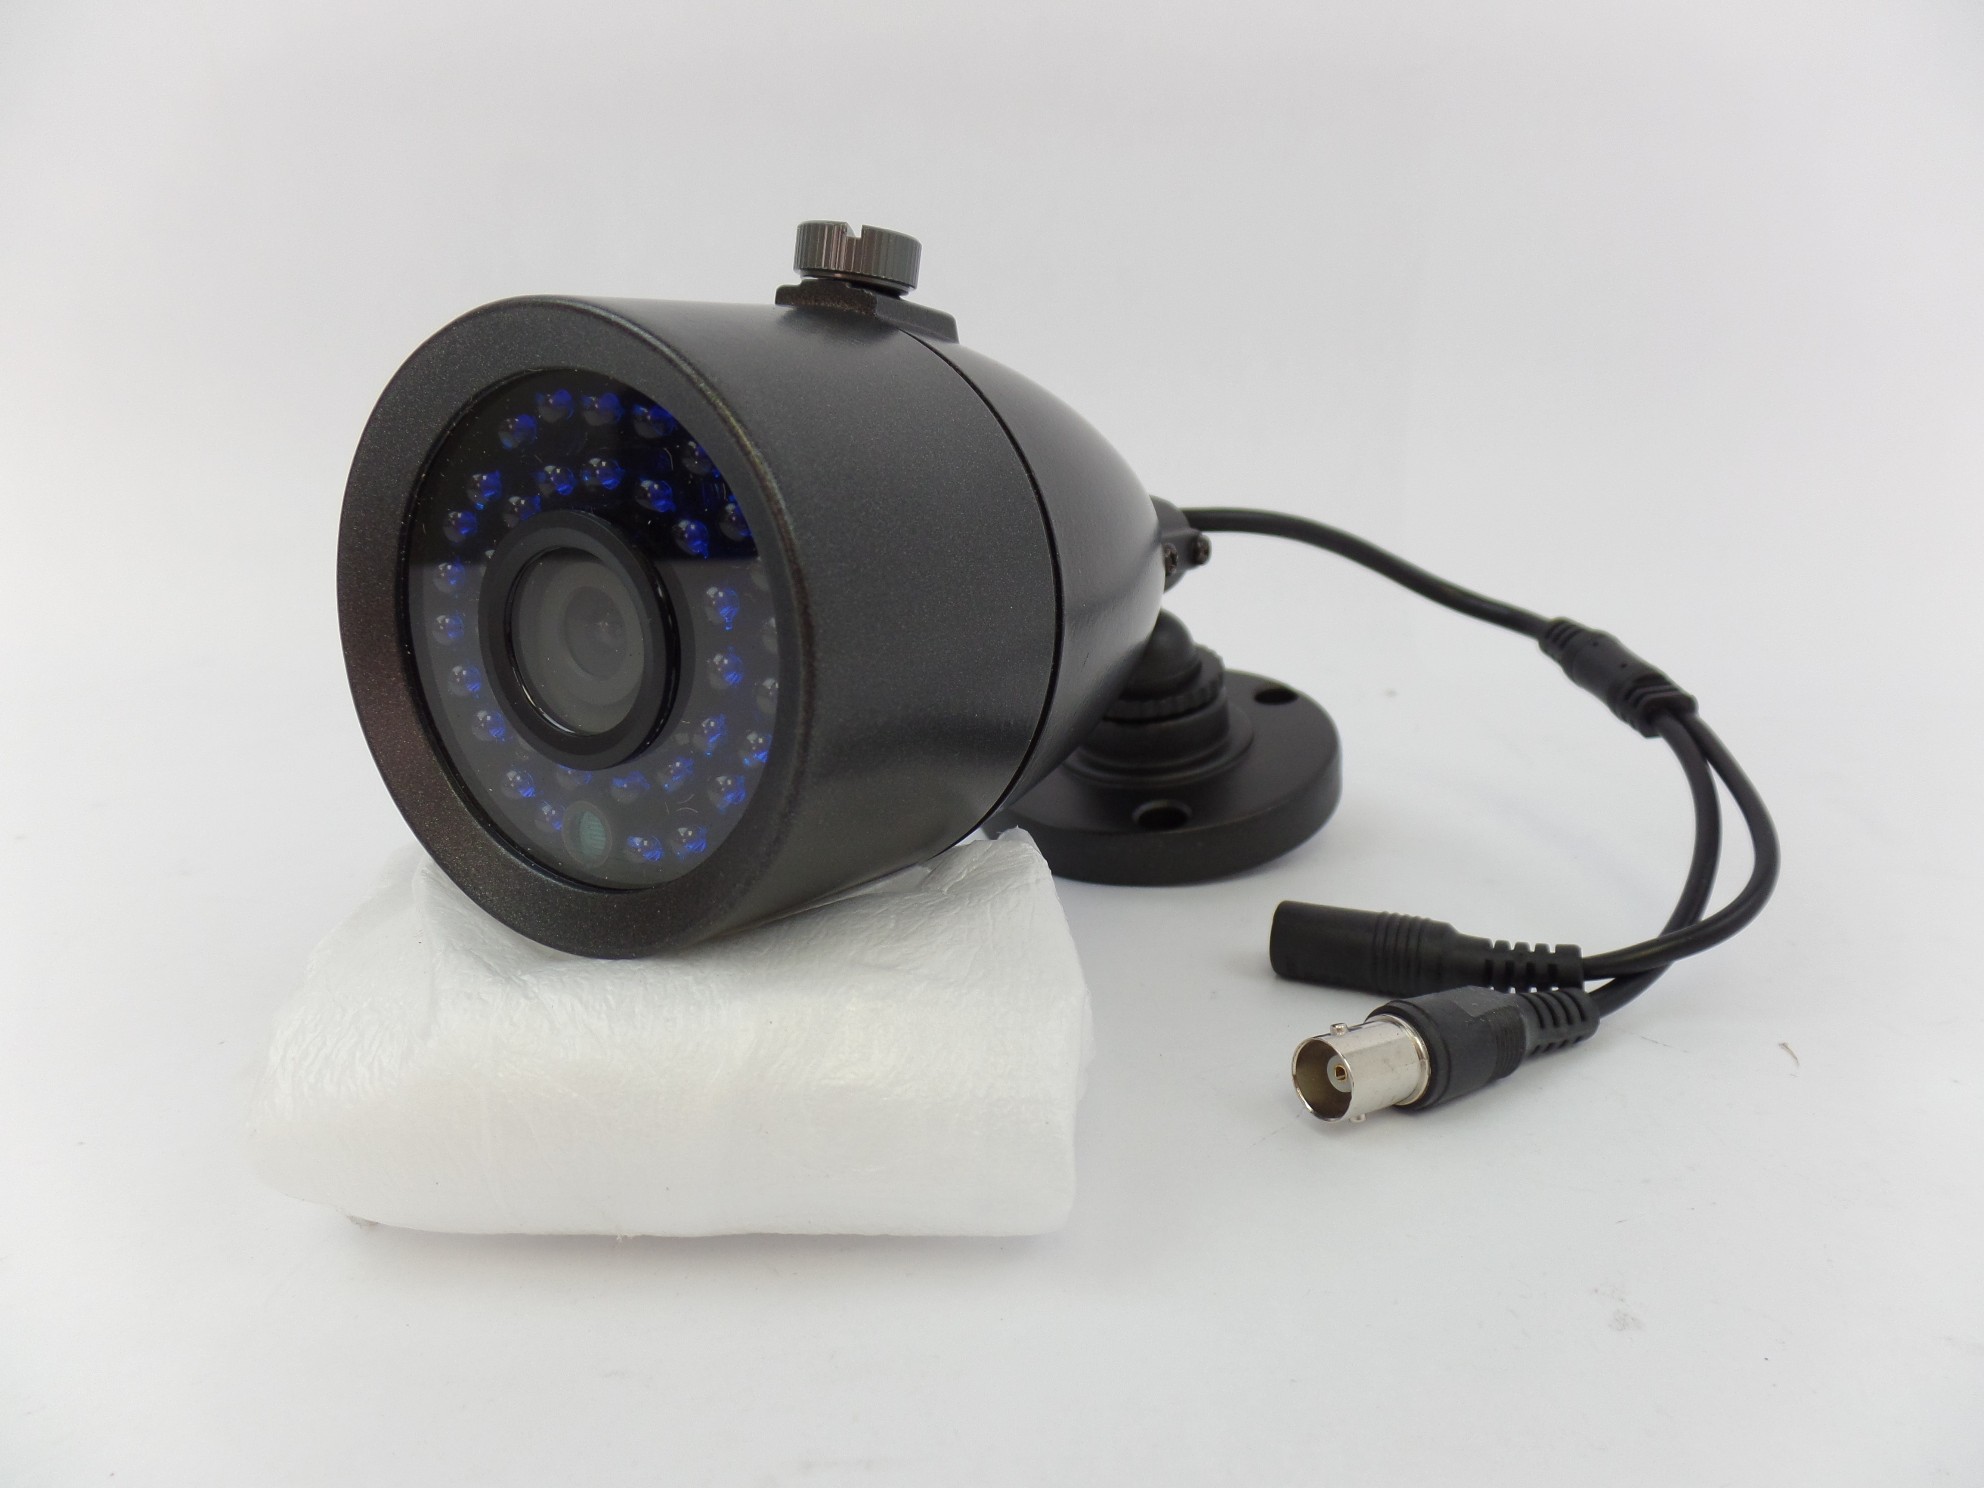 REVO Aero IR Bullet Weatherproof Outdoor Camera 2560x1960 5MP RACBJ36-3 - Black